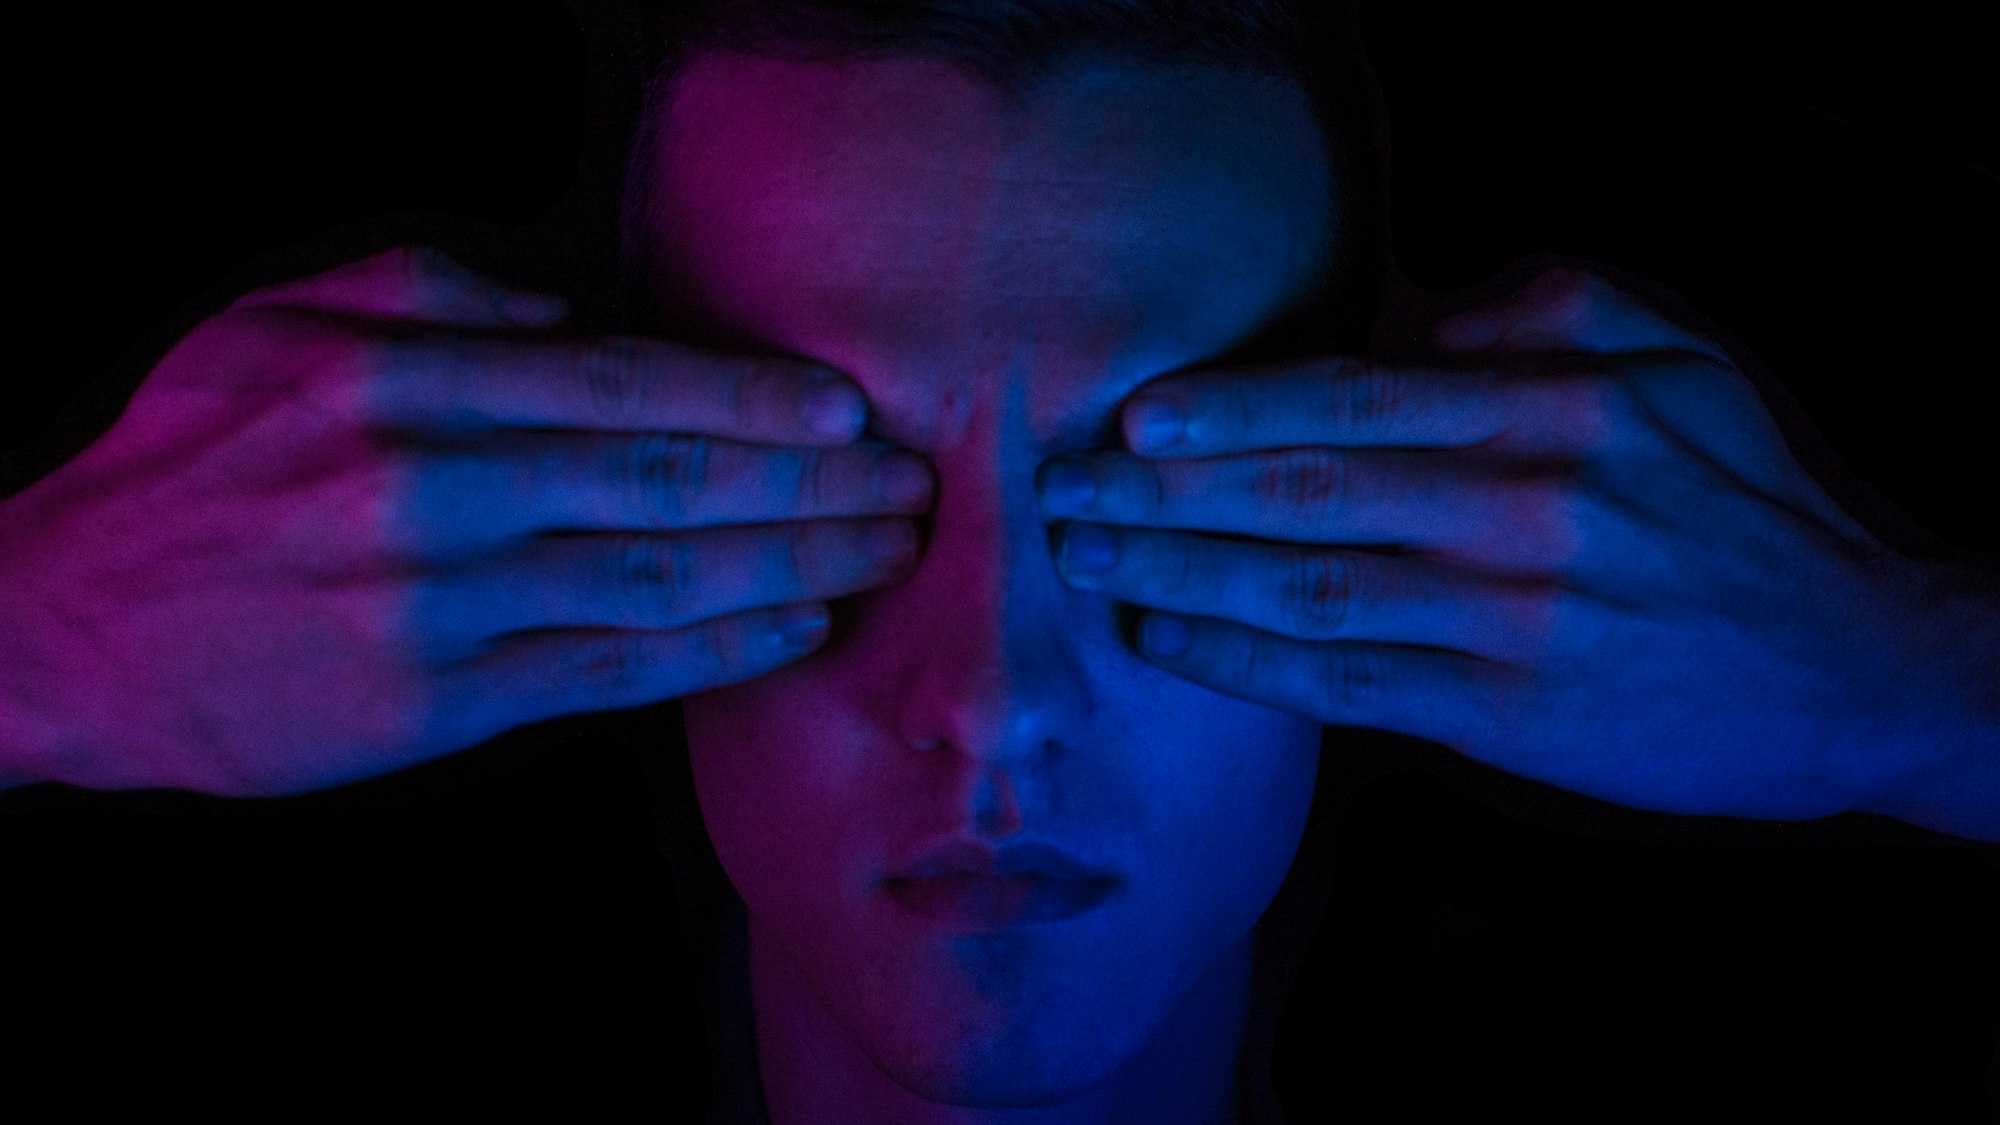 Man with eyes covered; image by Taras Chernus, via Unsplash